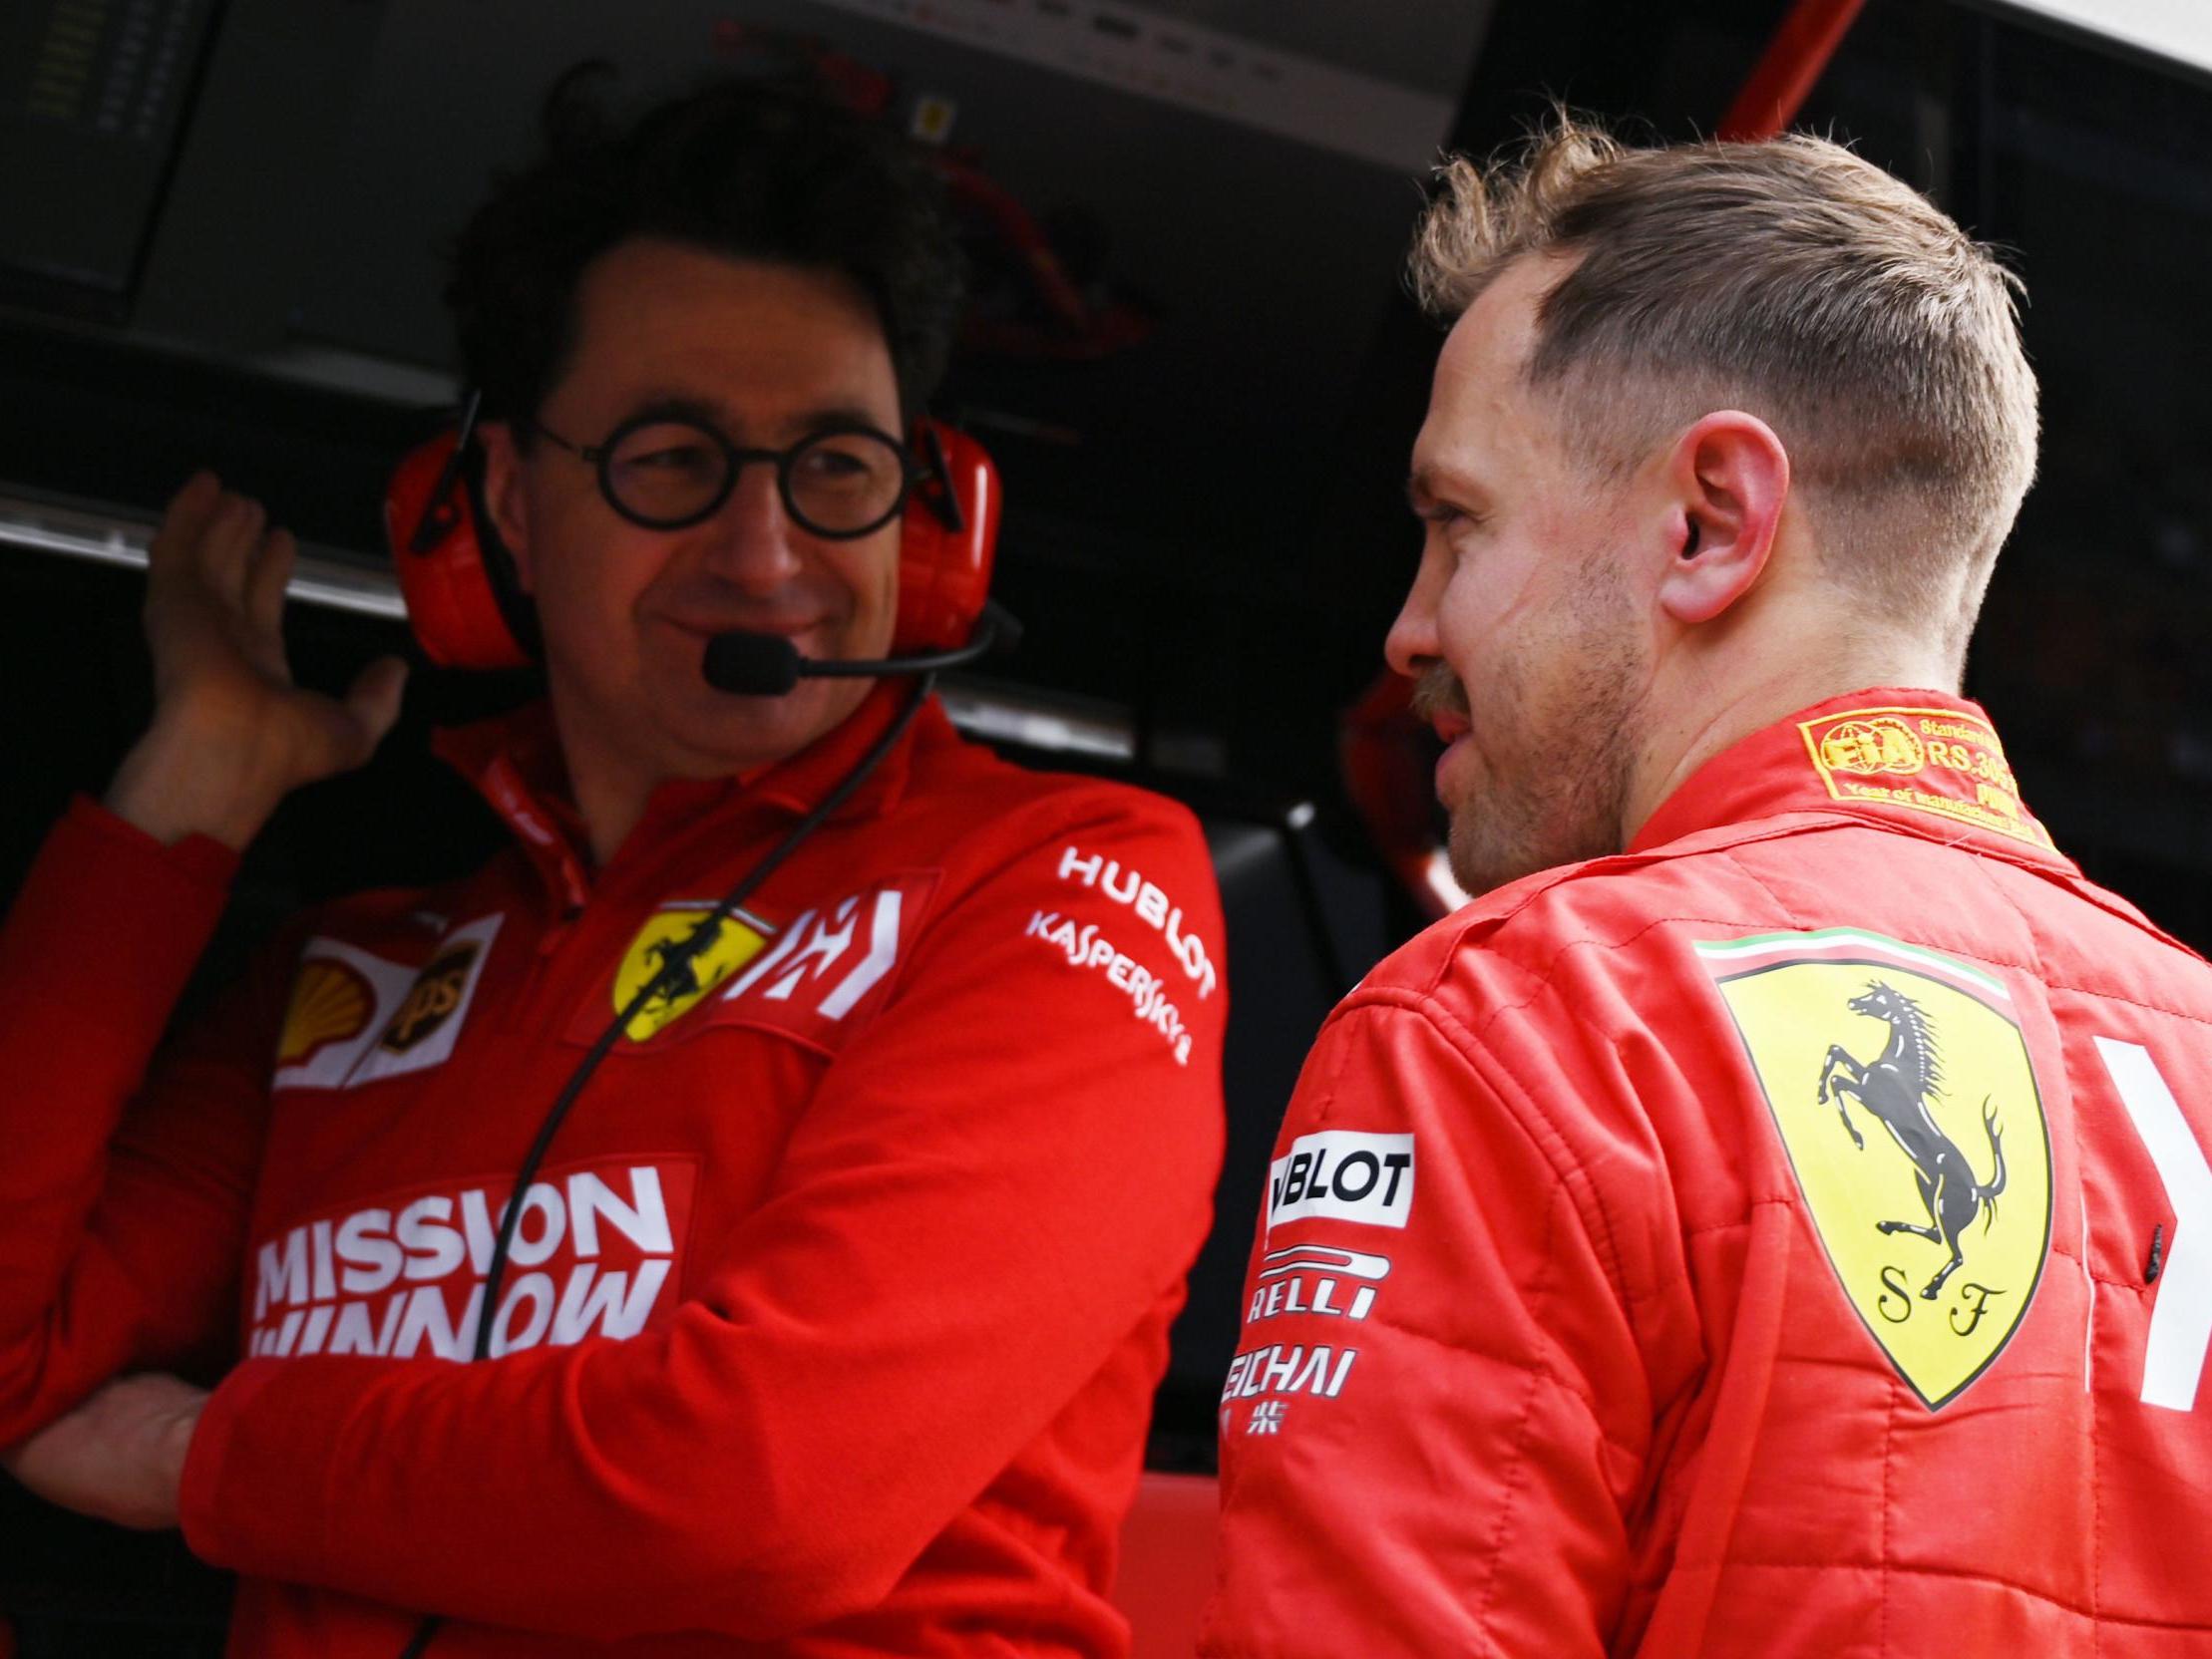 Mattia Binotto would rather see Sebastian Vettel join Mercedes than leave the sport